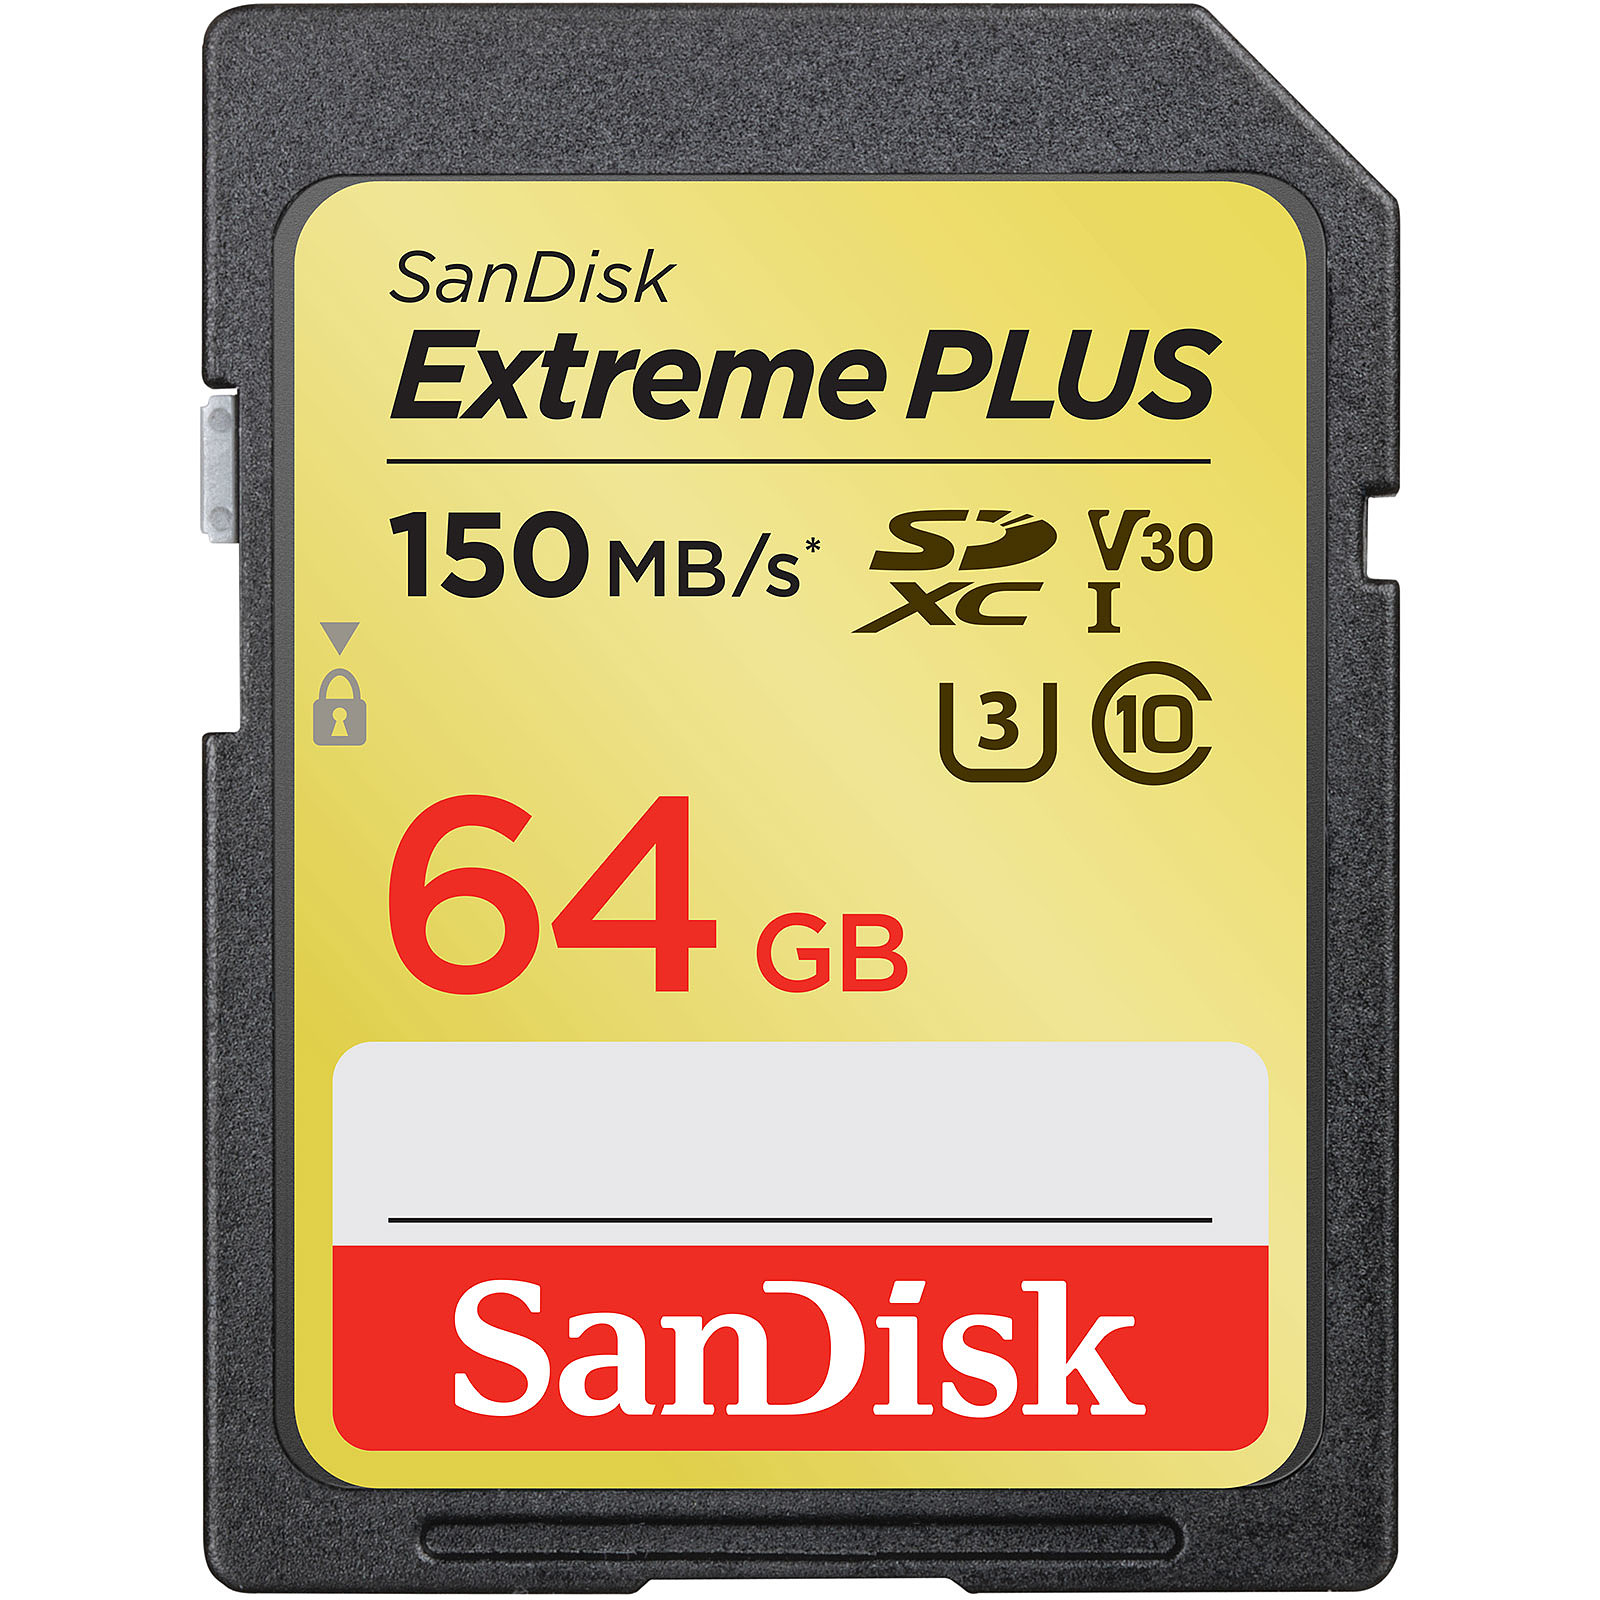 SanDisk Carte memoire SDXC Extreme PLUS UHS-1 U3 V30 64 Go - Carte memoire Sandisk